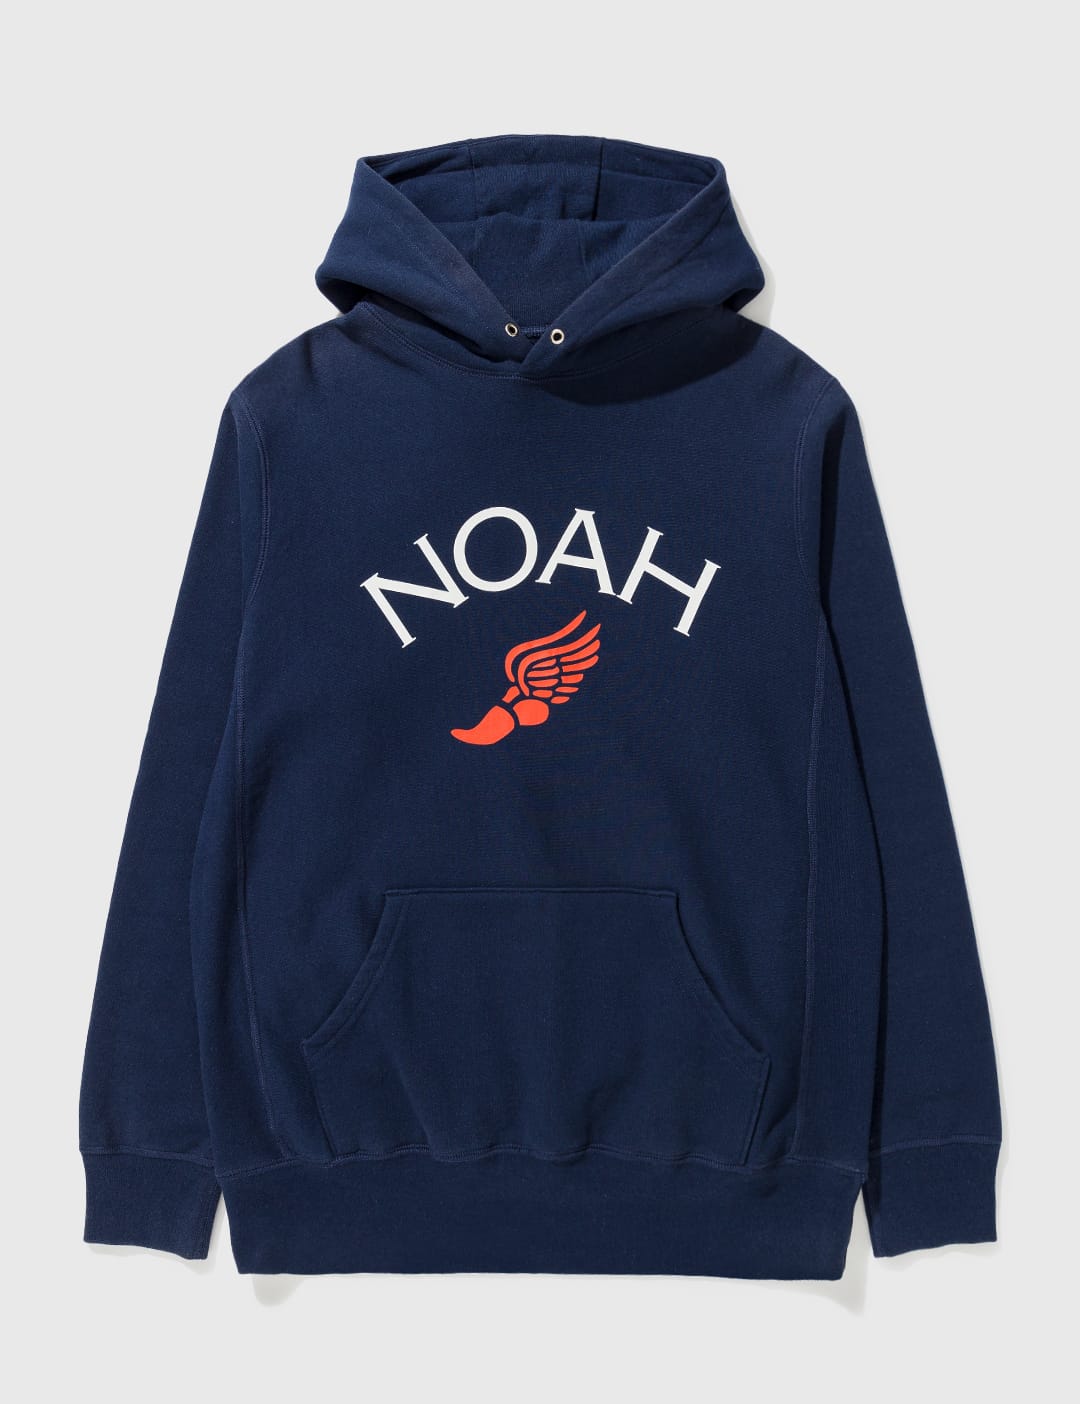 Noah - NOAH 1st edition Winged Foot Logo Hoodie | HBX - Globally